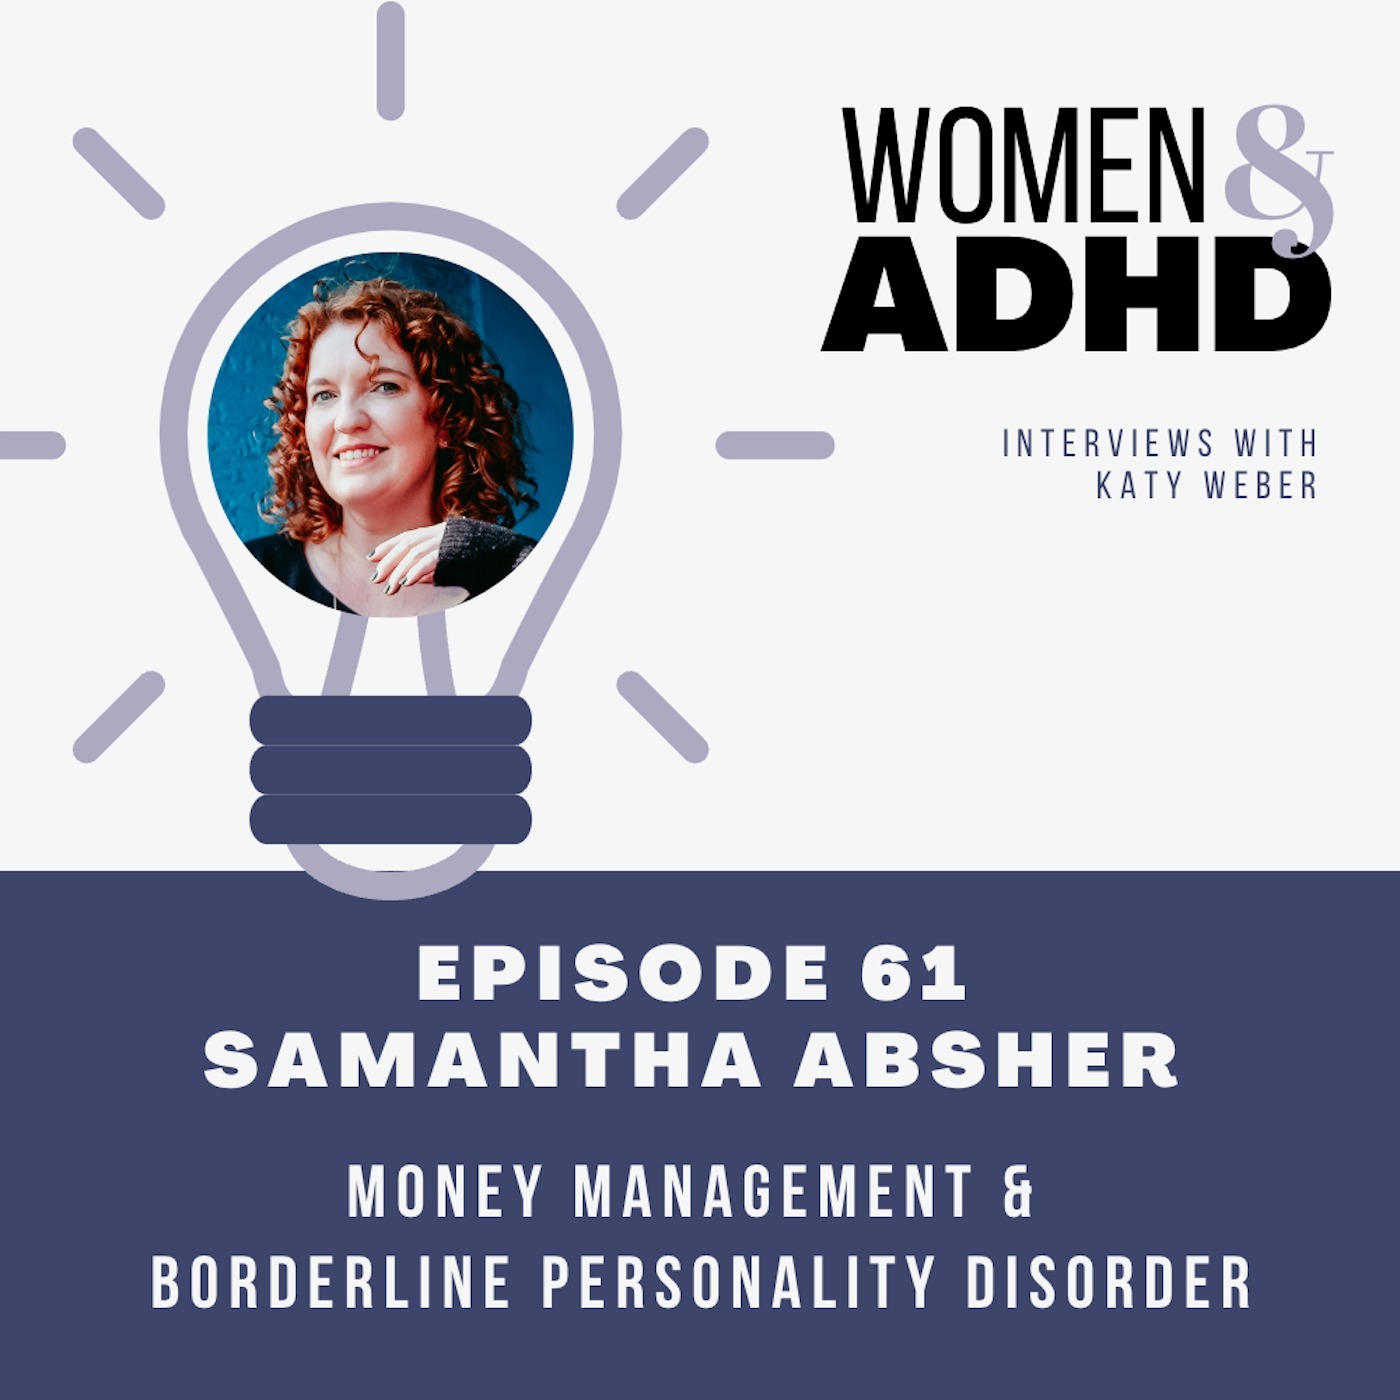 Samantha A: Money management & borderline personality disorder